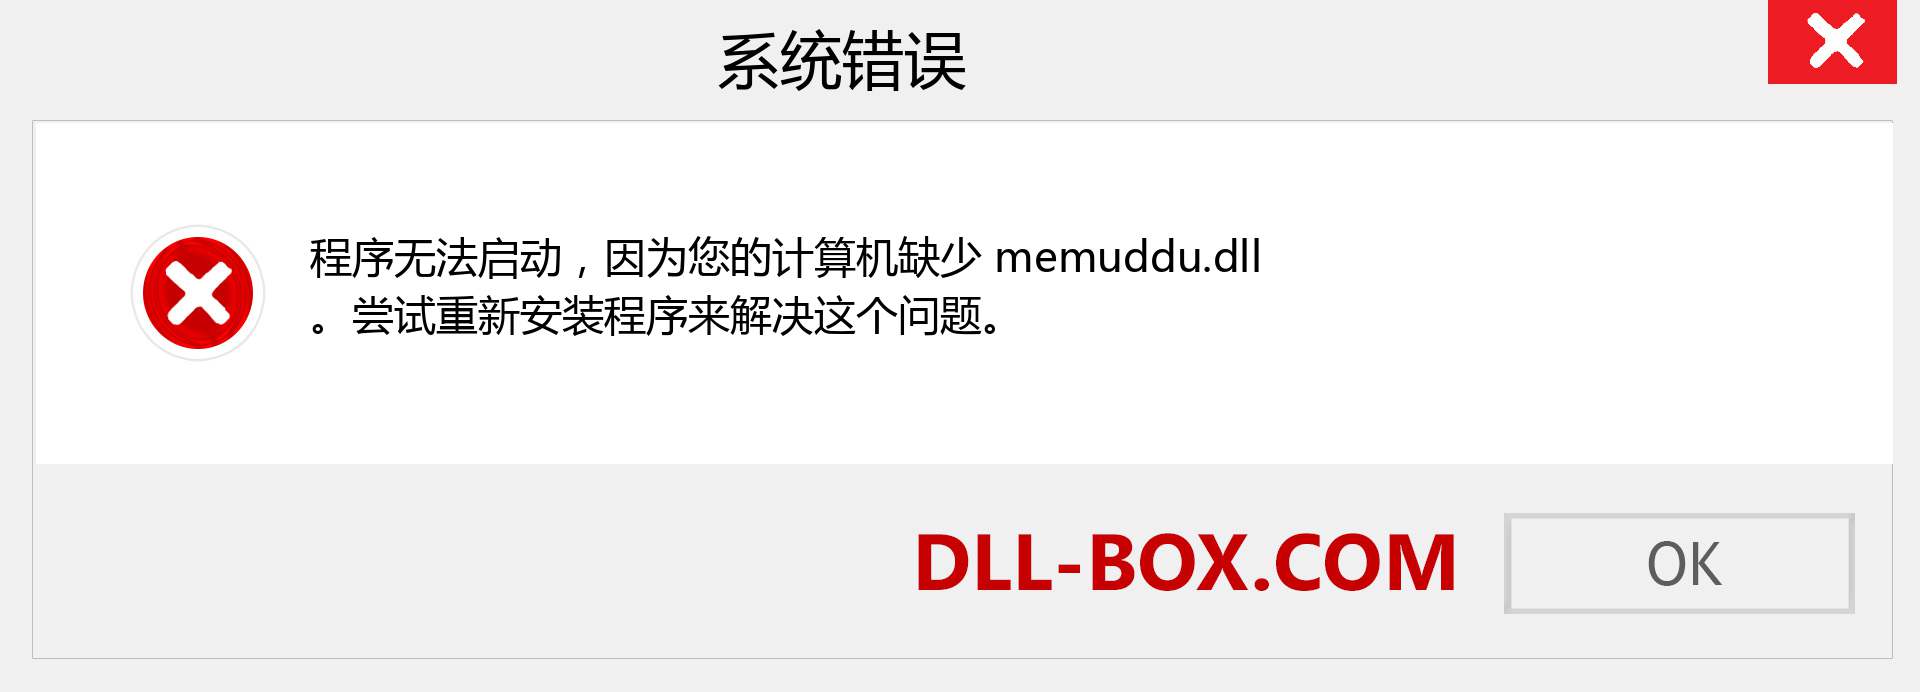 memuddu.dll 文件丢失？。 适用于 Windows 7、8、10 的下载 - 修复 Windows、照片、图像上的 memuddu dll 丢失错误